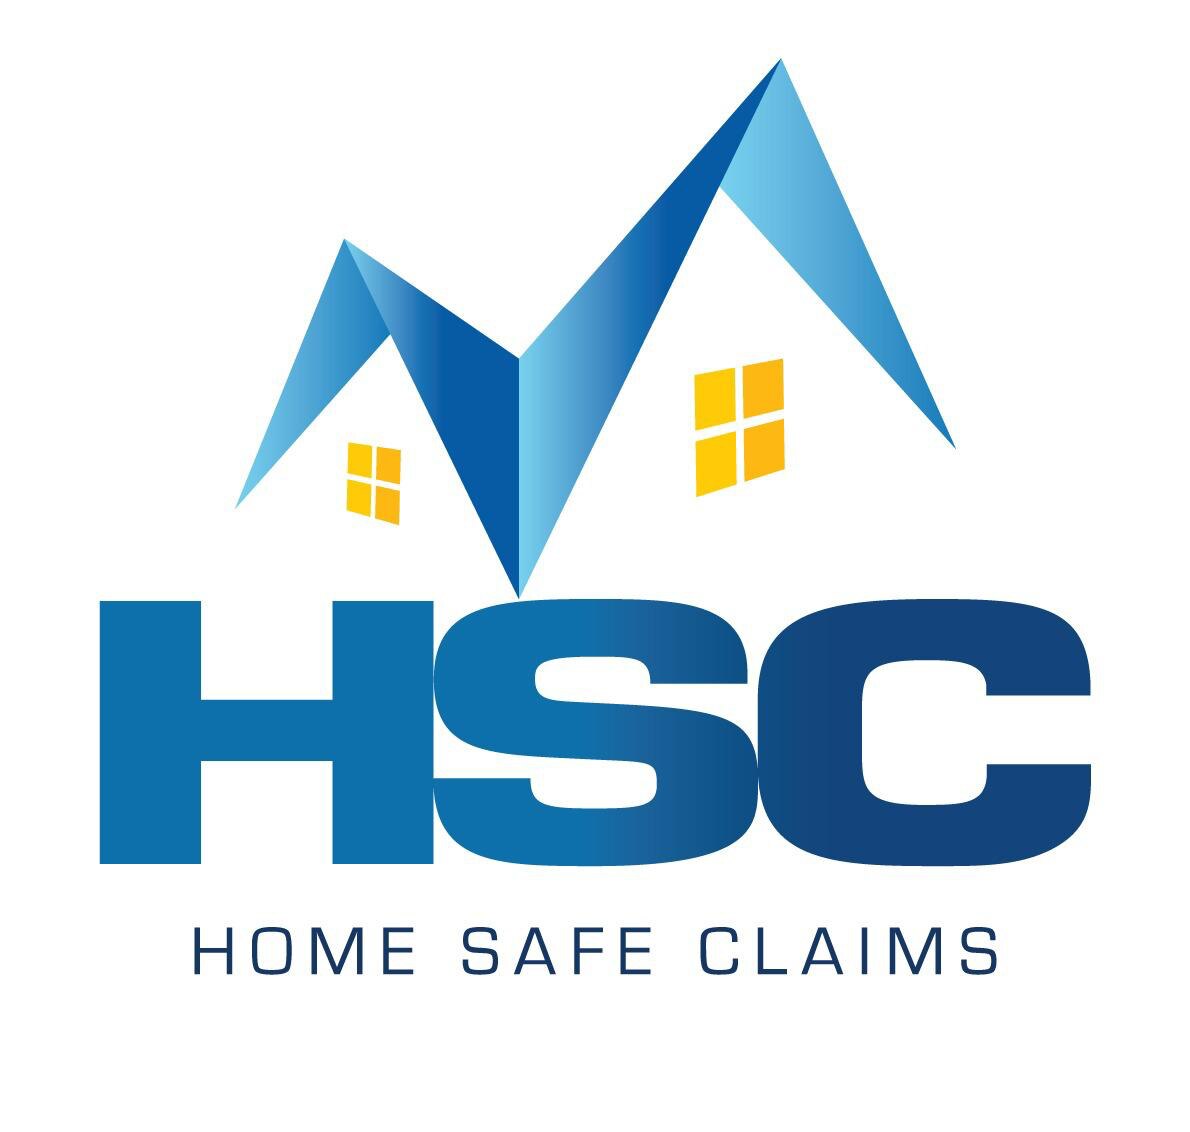 Home Safe Claims - Florida Public Adjusters